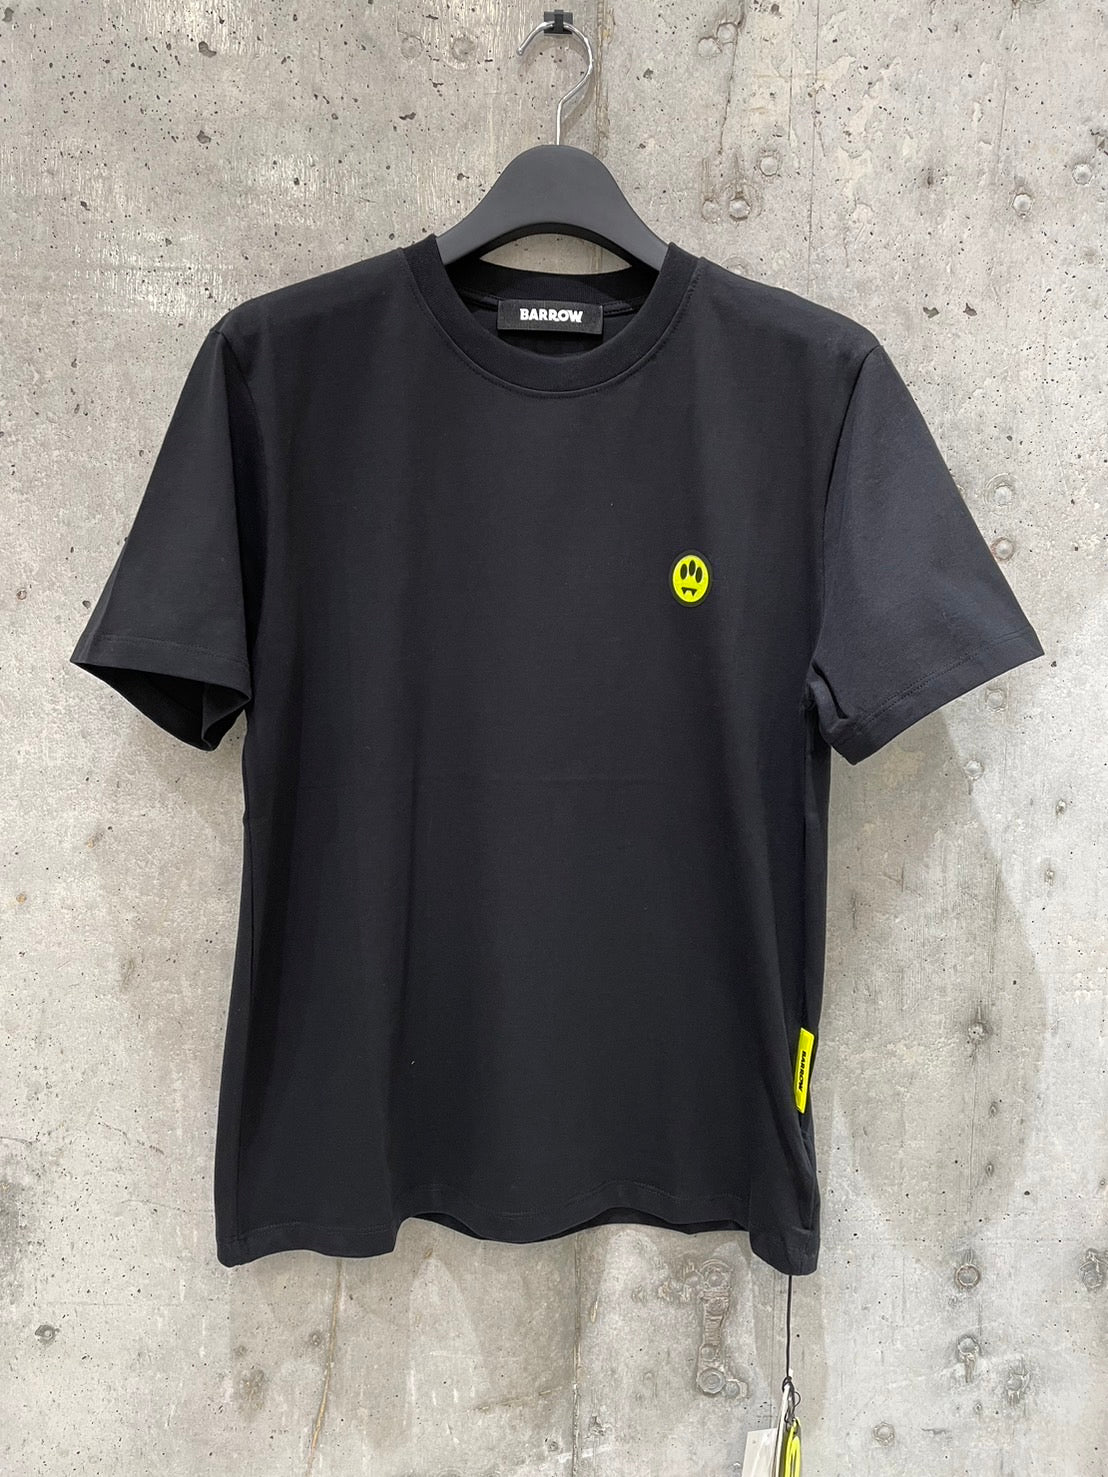 BARROW/Tシャツ/Black/S4BWUATH131